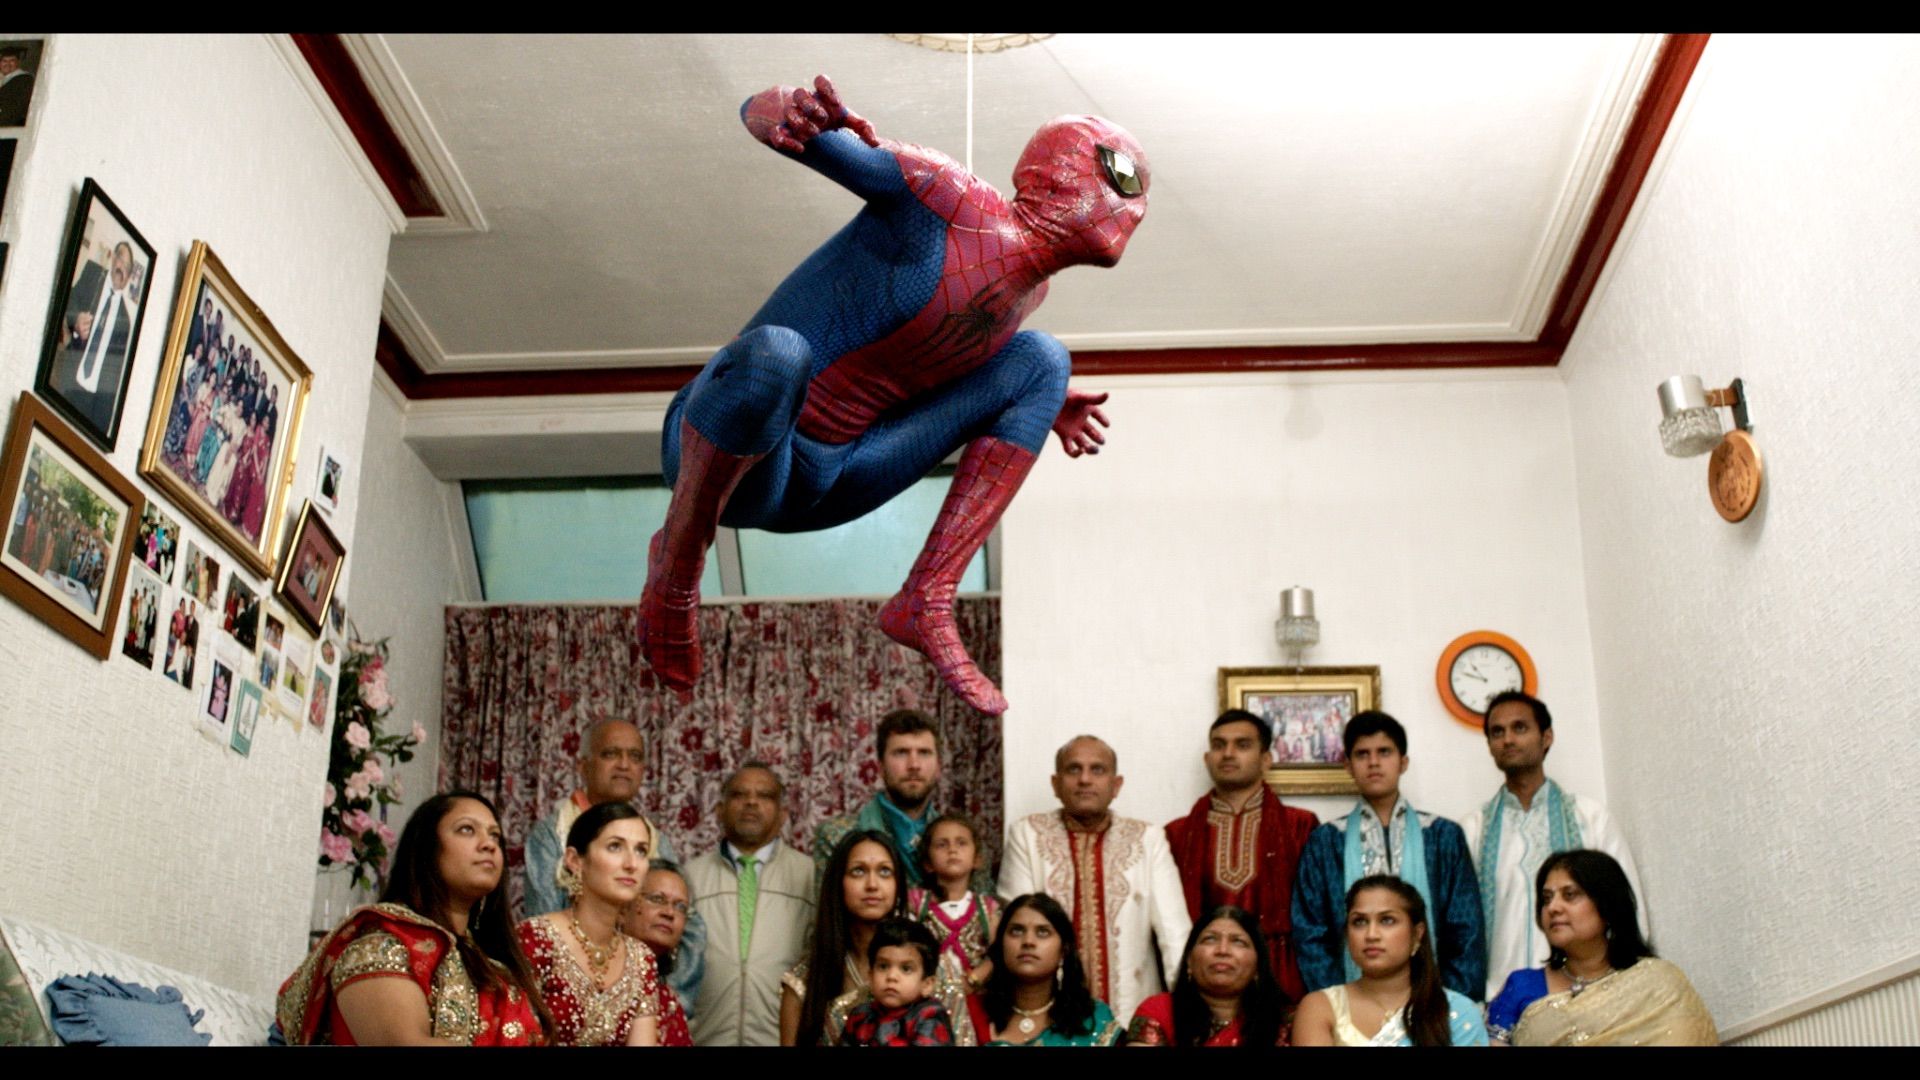 Spider-man, Flip (acrobatic), Fictional character, Superhero, Stunt performer, Performance, Street stunts, Art, 